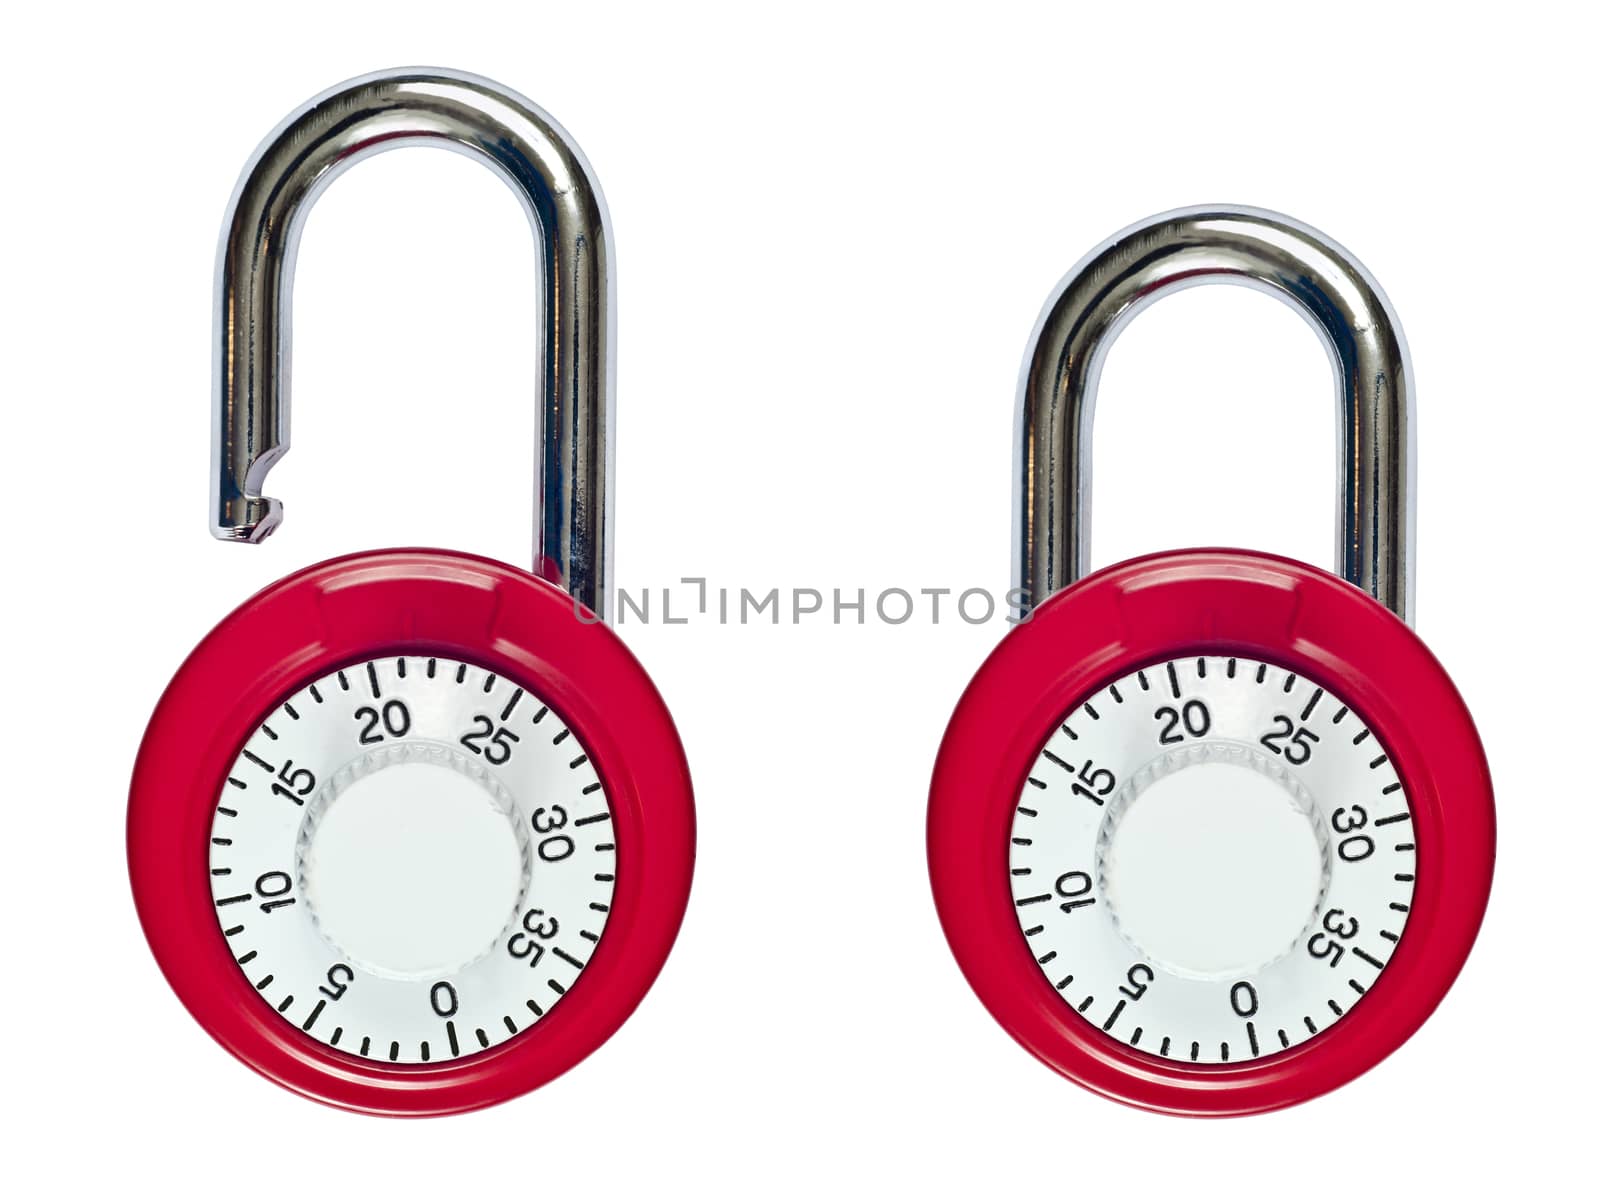 Combination Locks Locked and Unlocked by stockbuster1